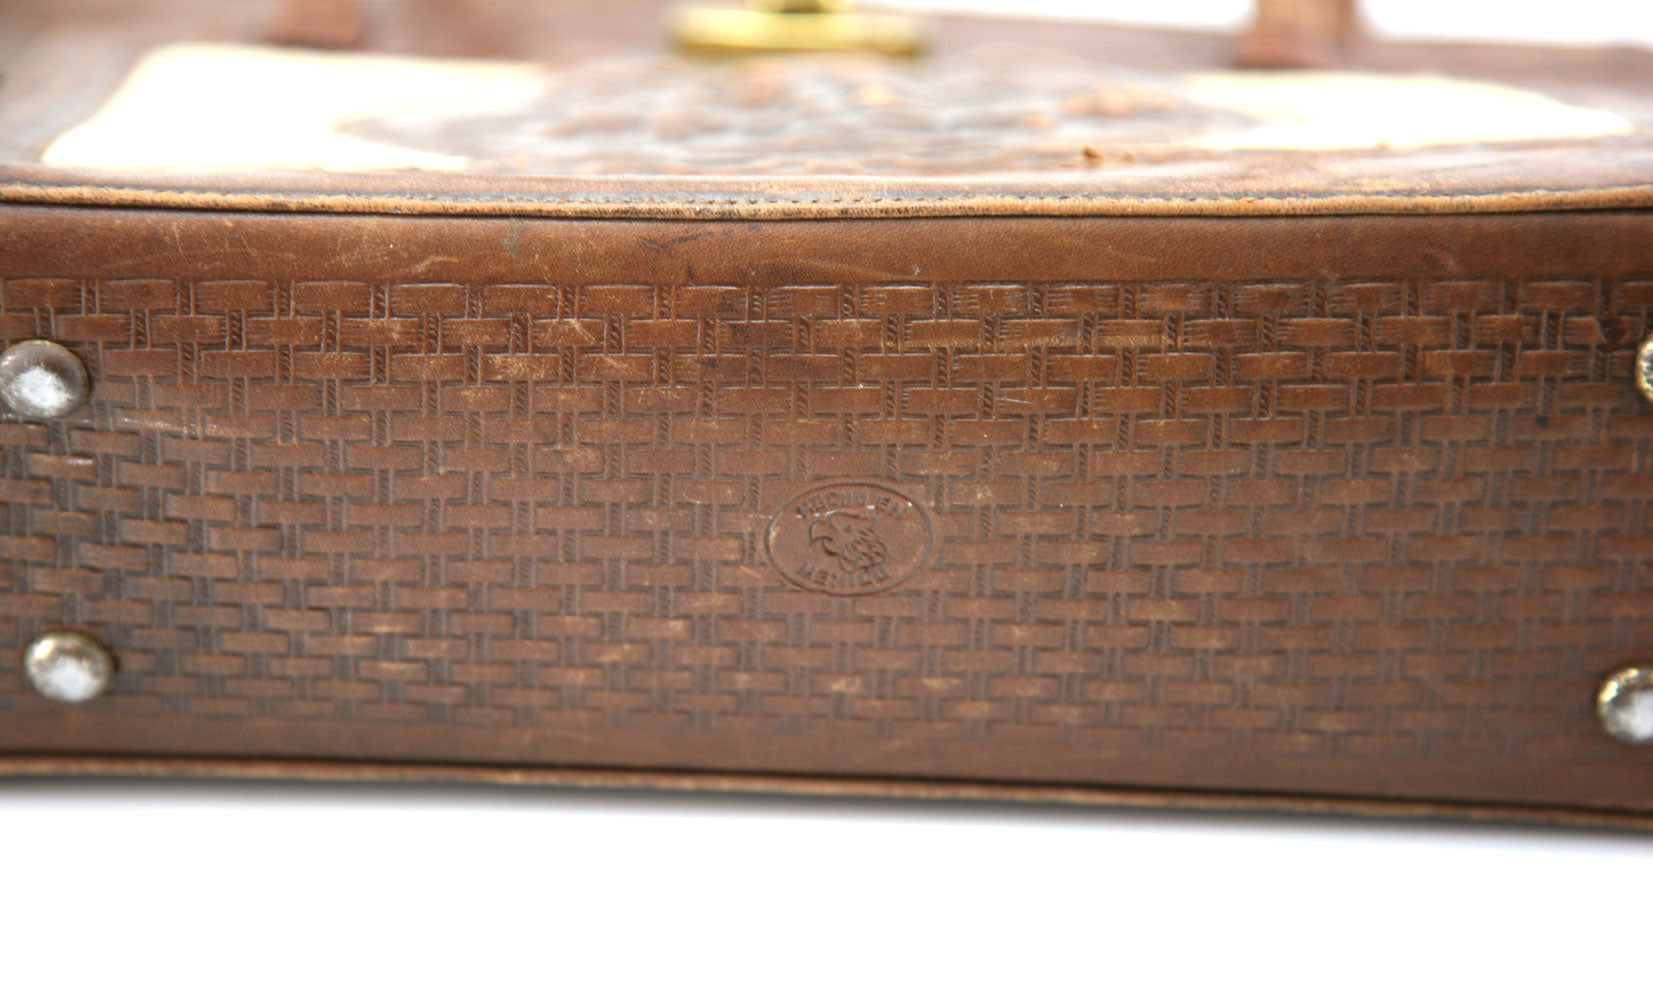 Vintage Leather Purse with Eagle Design